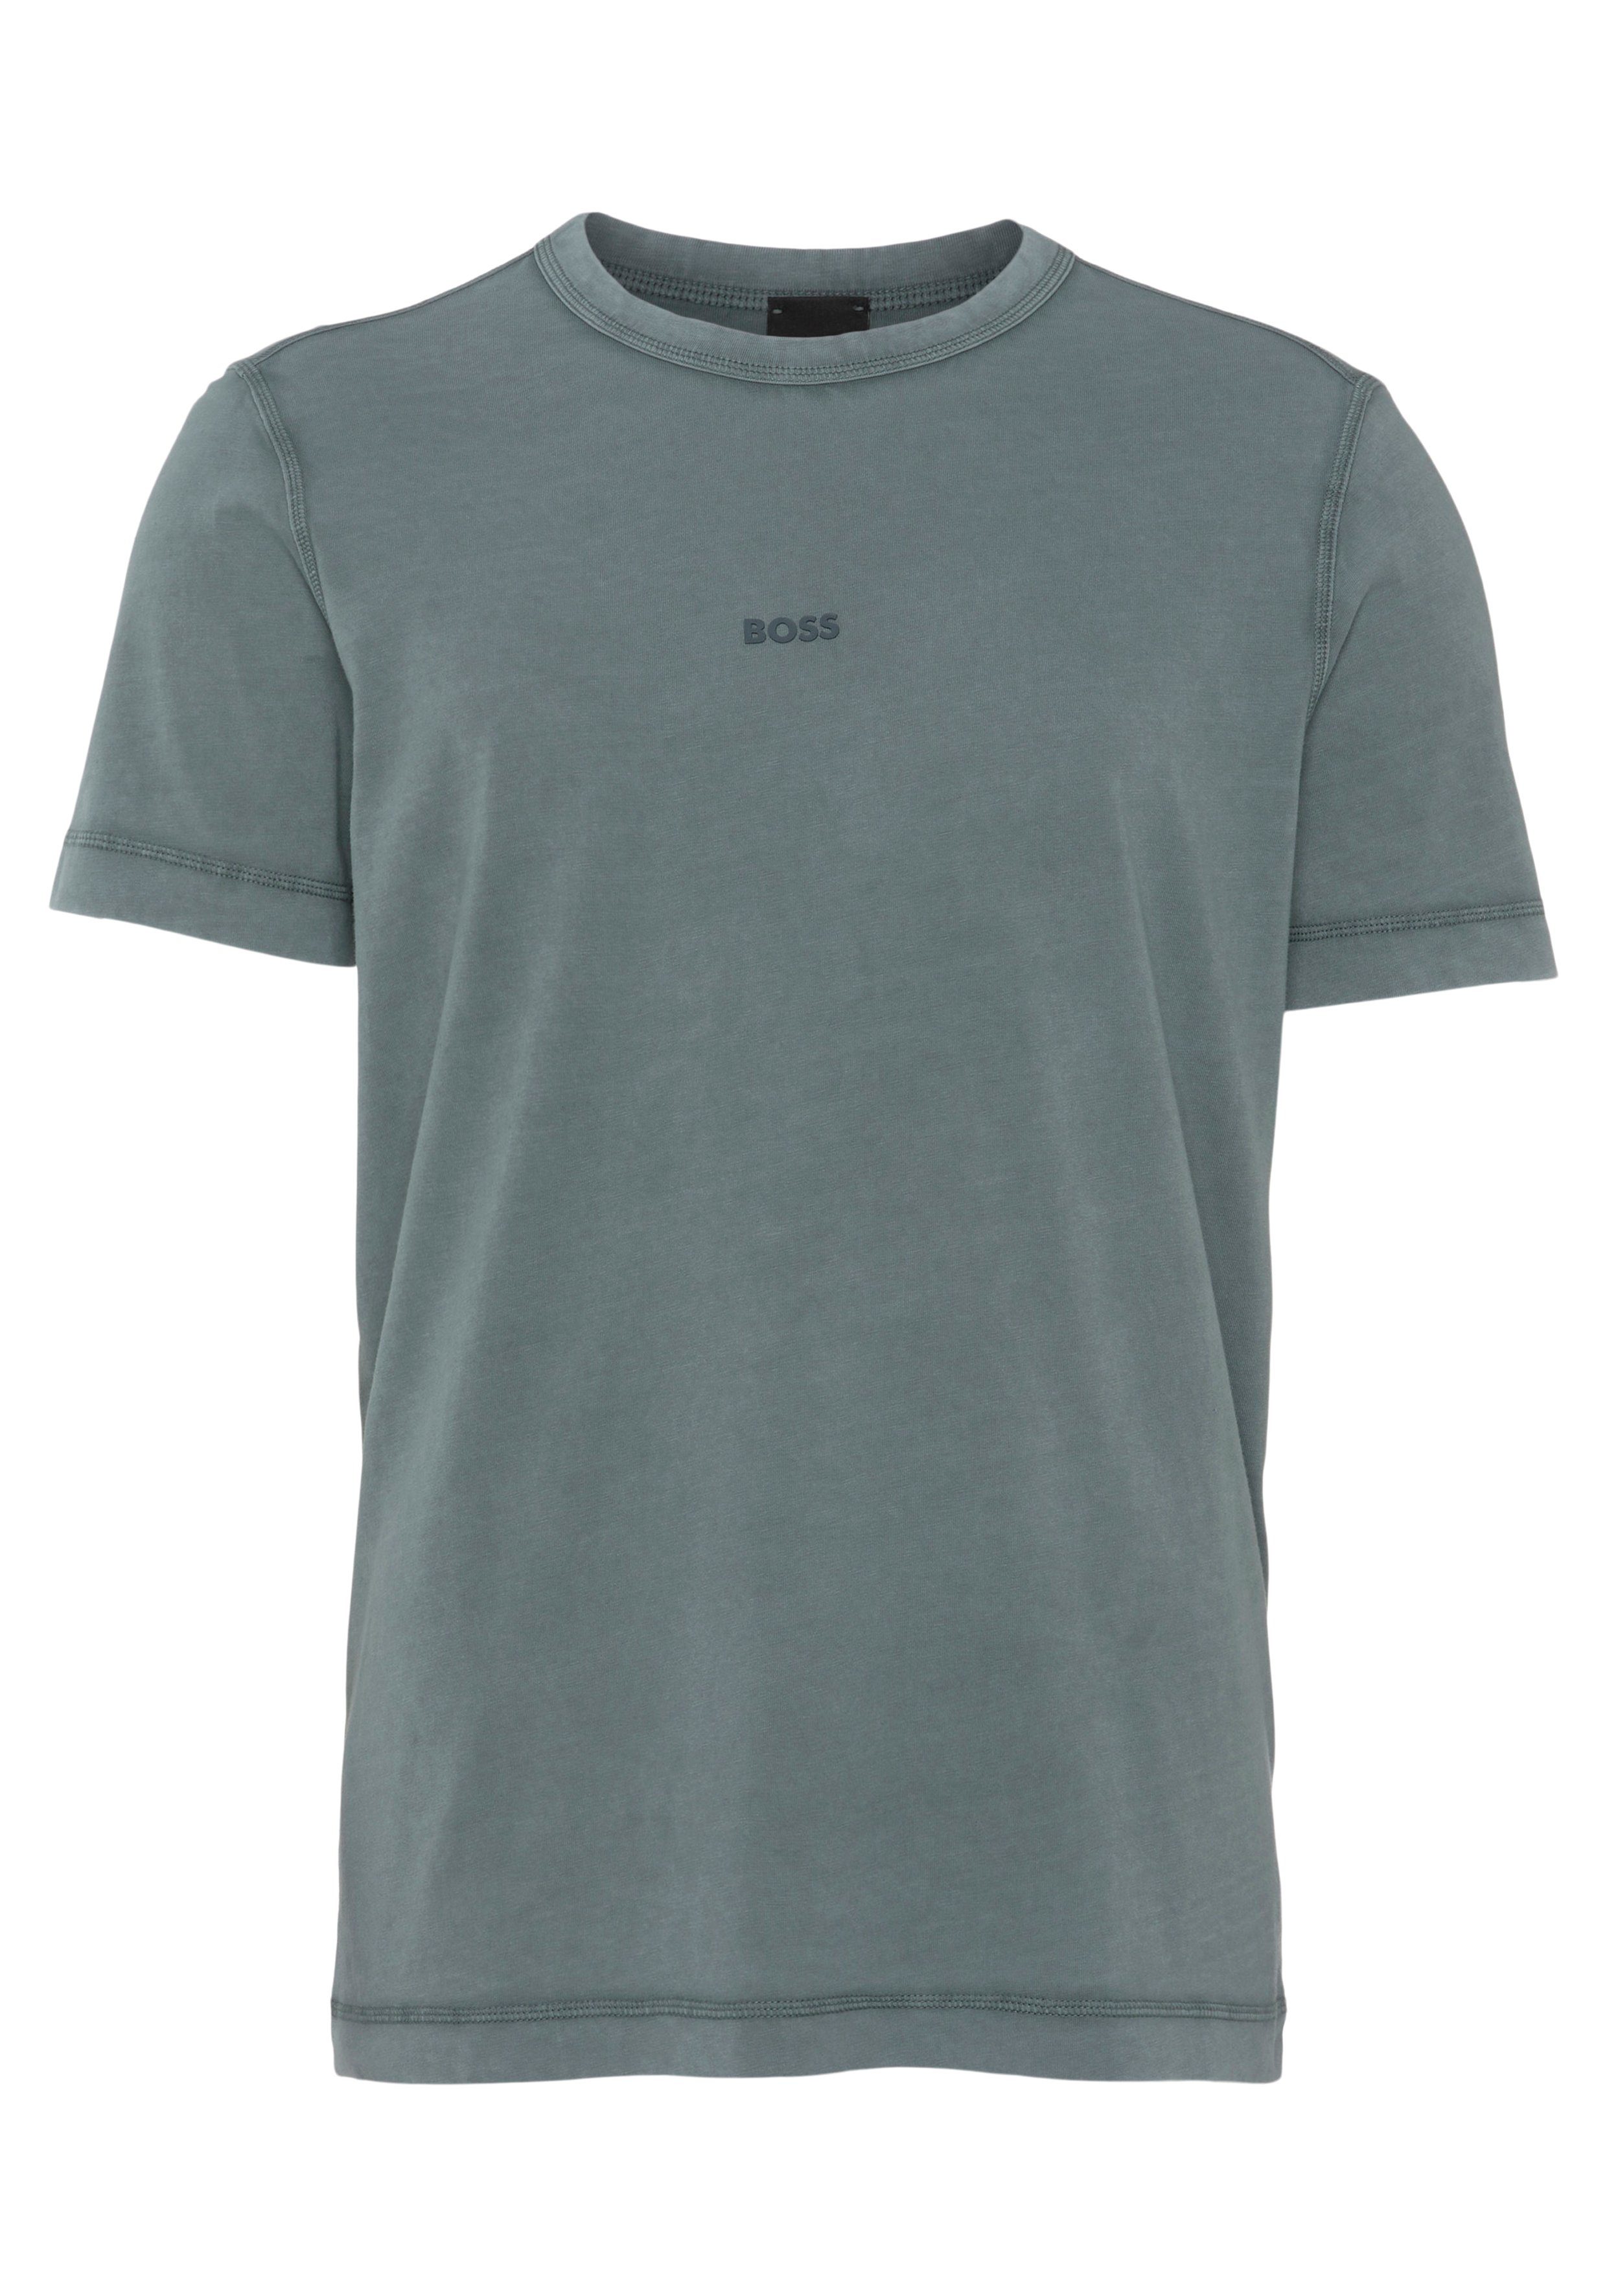 BOSS ORANGE Markenlabel T-Shirt Green375 Tokks BOSS Open ORANGE mit